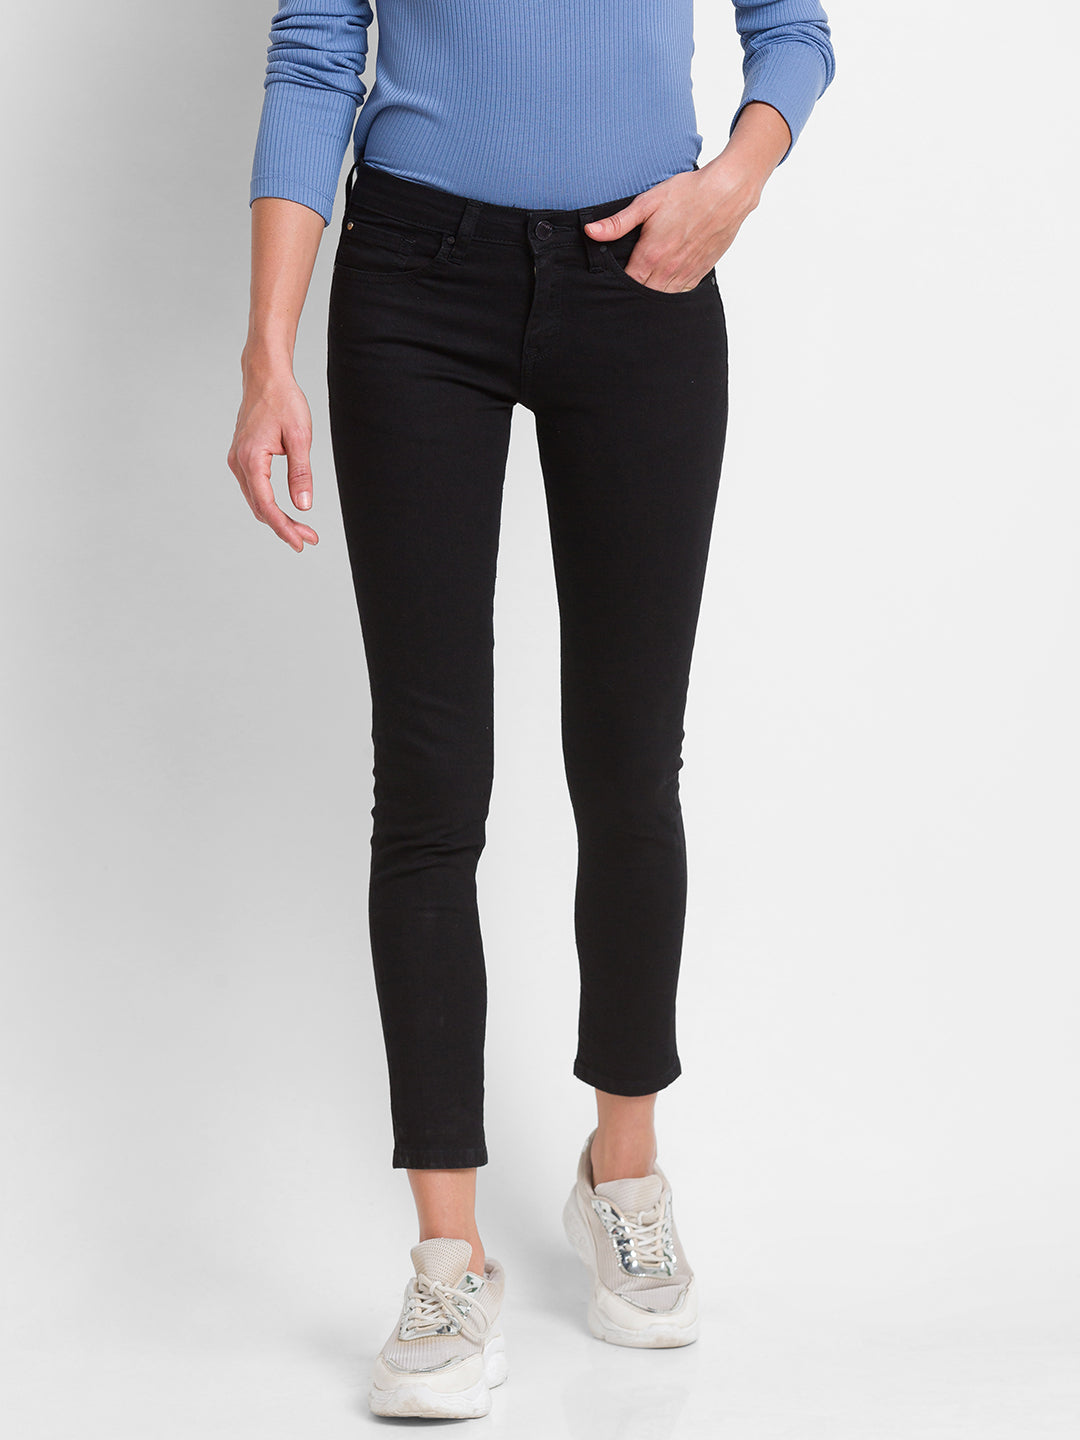 Spykar Black Lycra Super Skinny Regular Length Jeans For Women (Alicia)